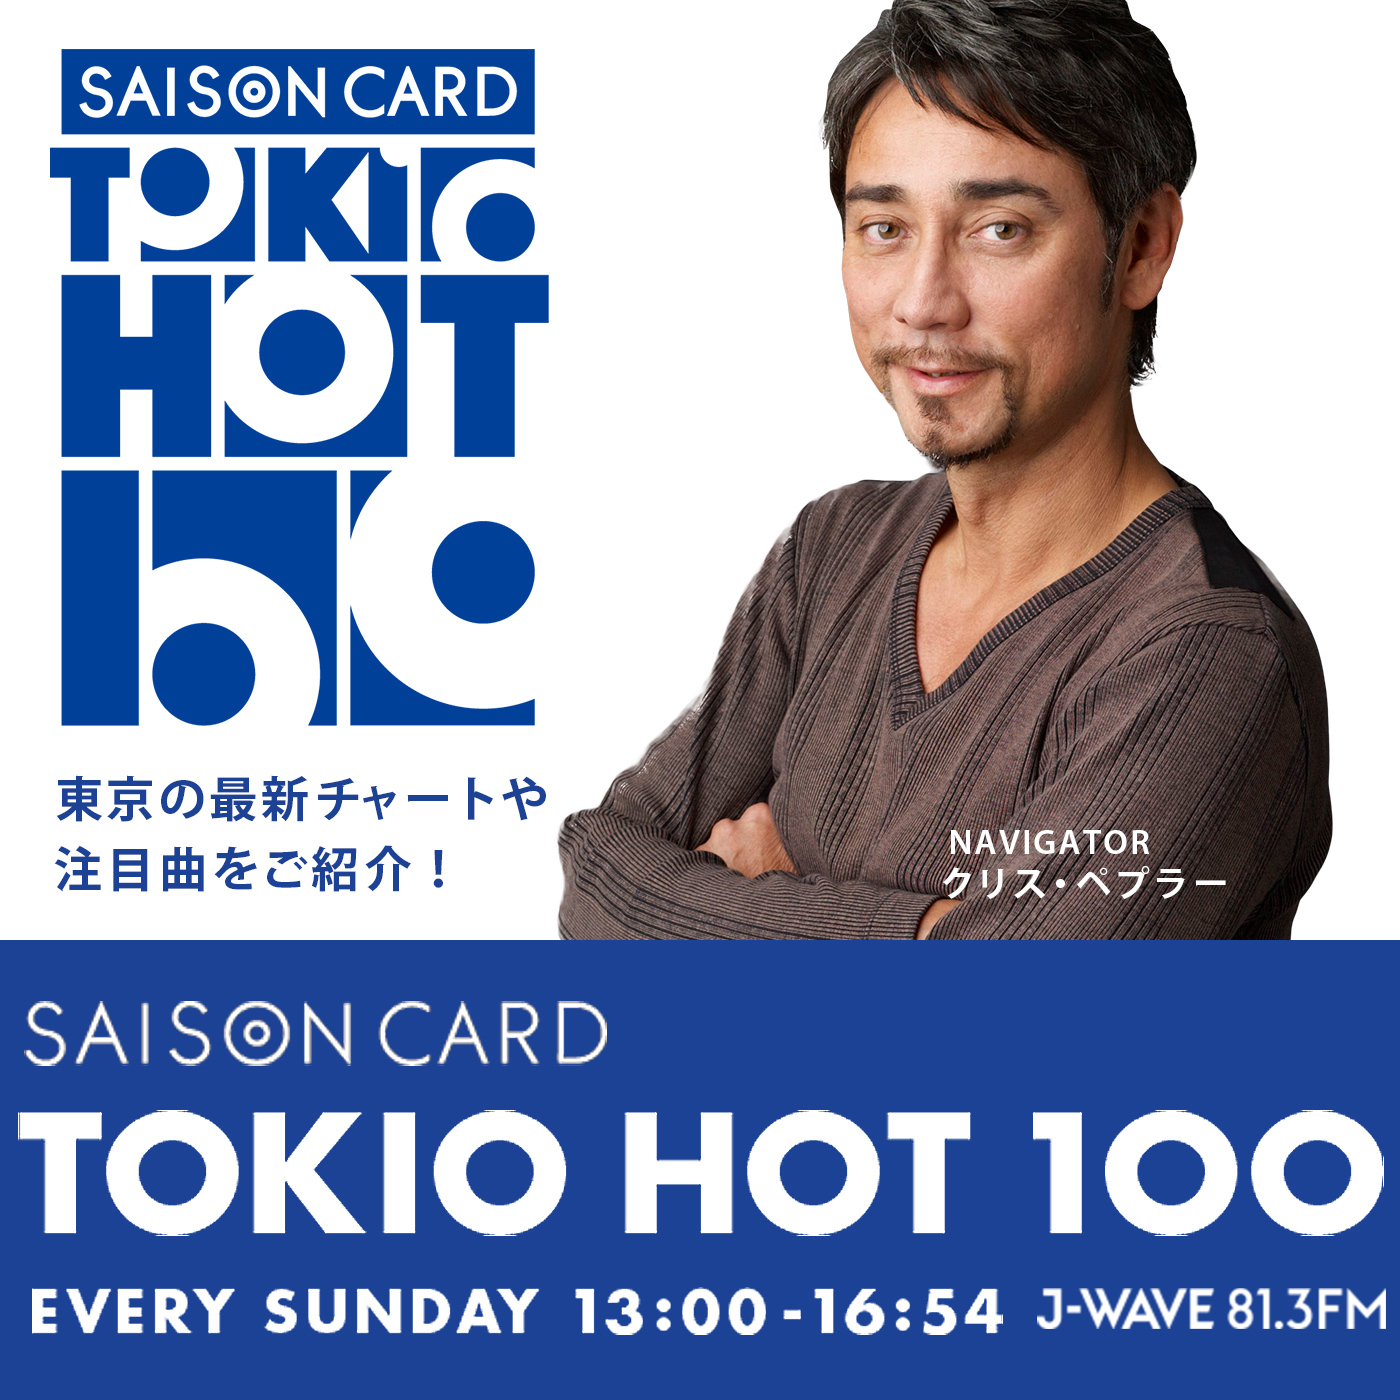 J-WAVE「TOKIO HOT 100」ナビゲーターとして活躍